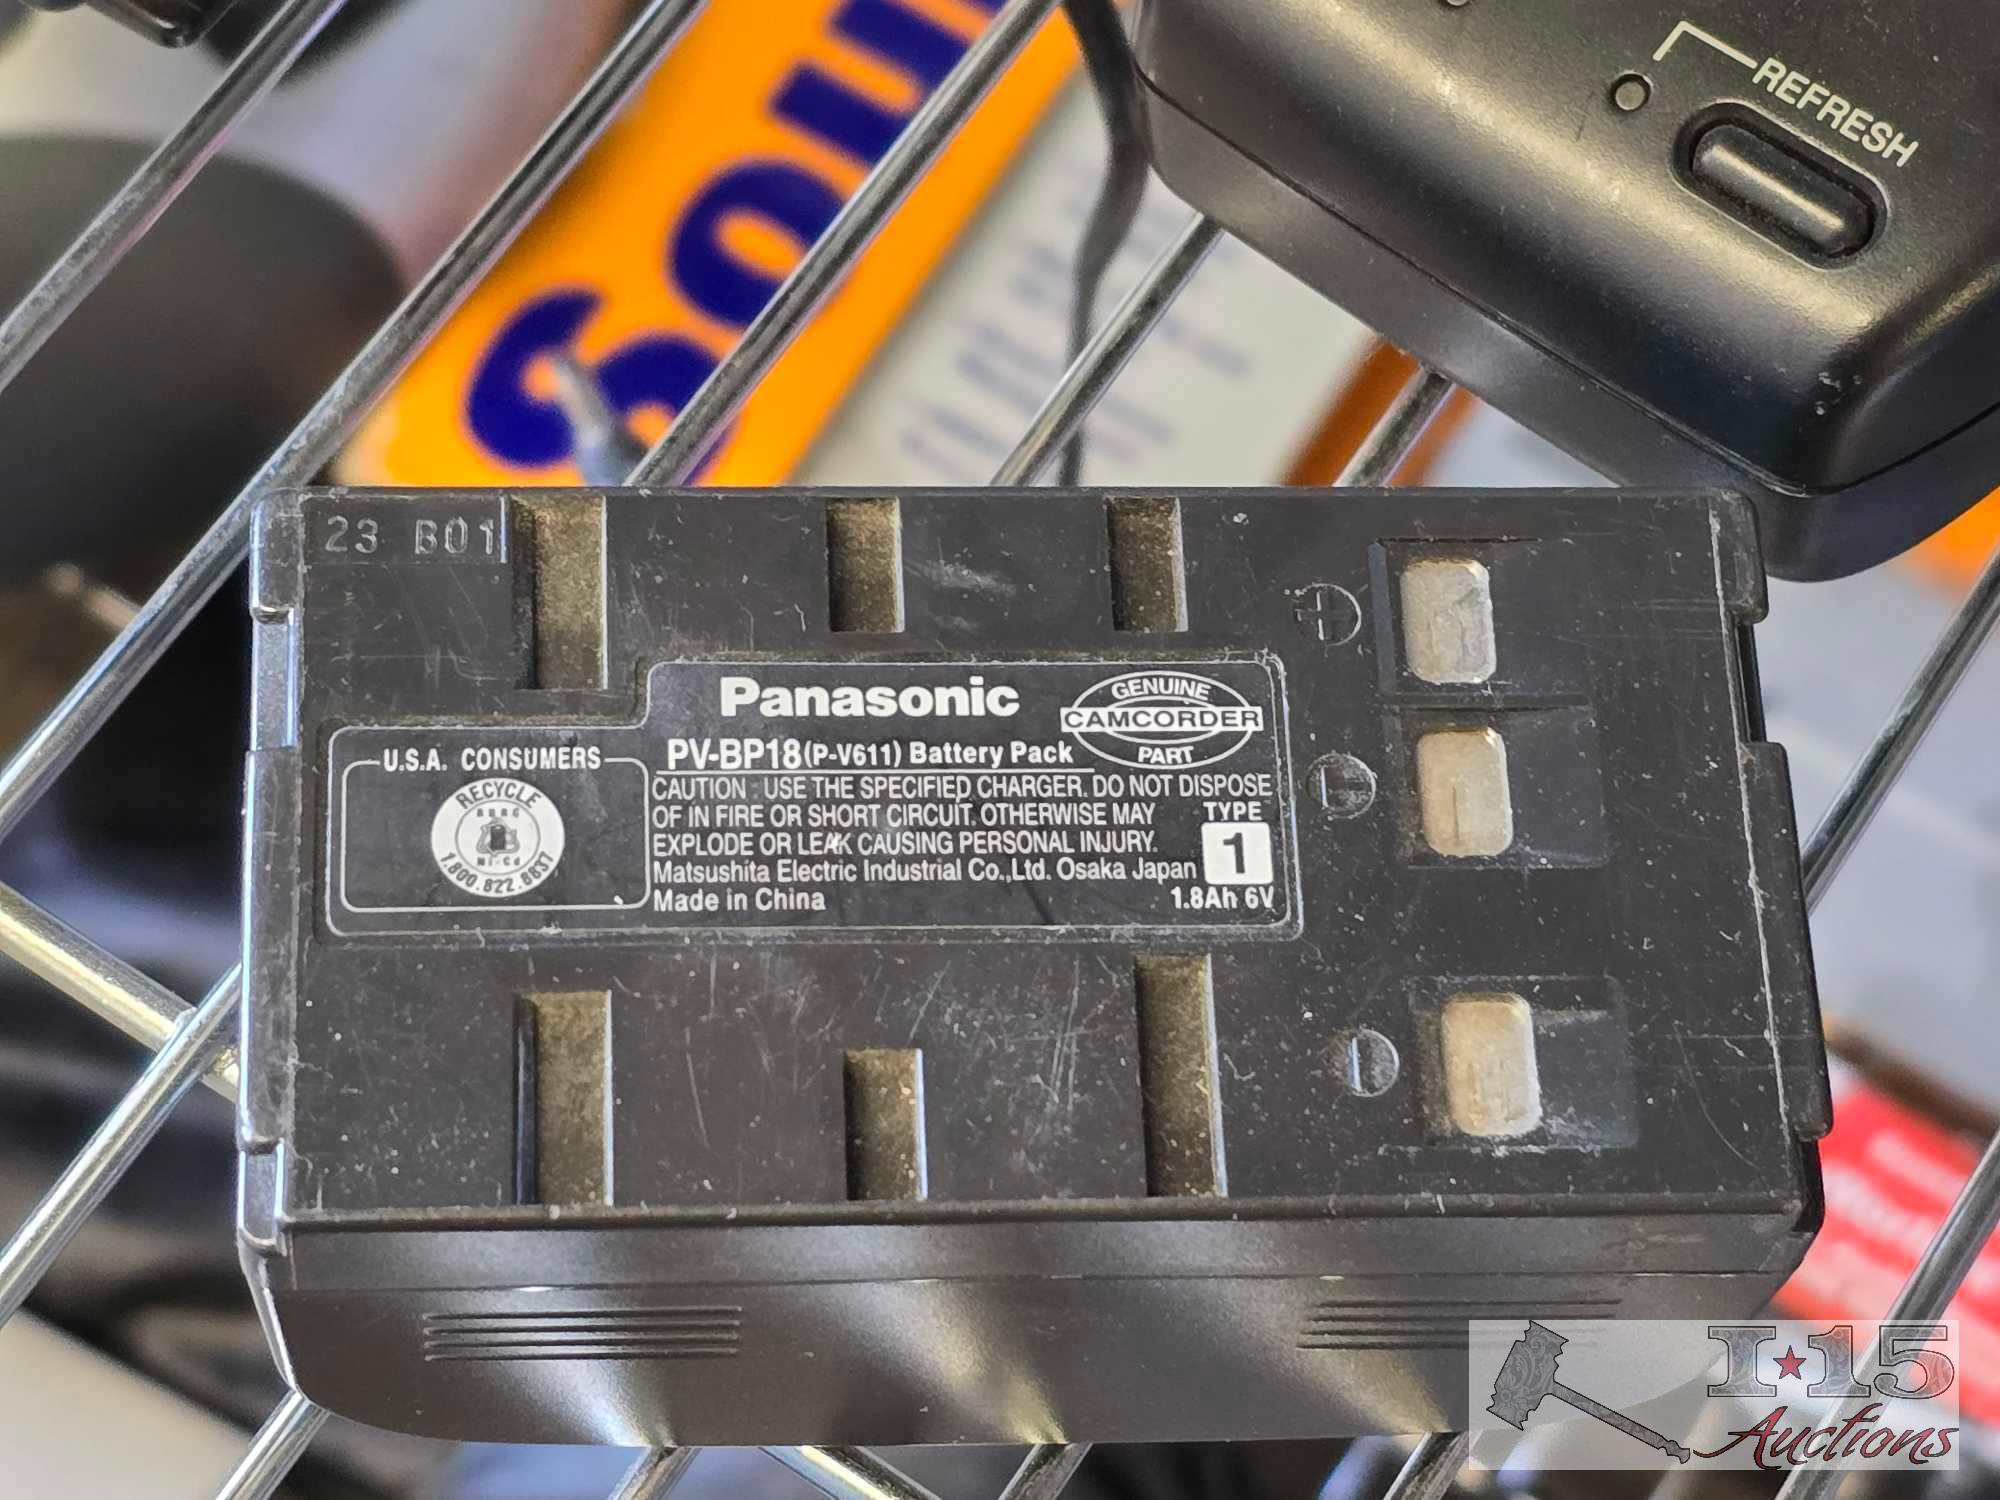 Palmcorder VHSc Video Recorder